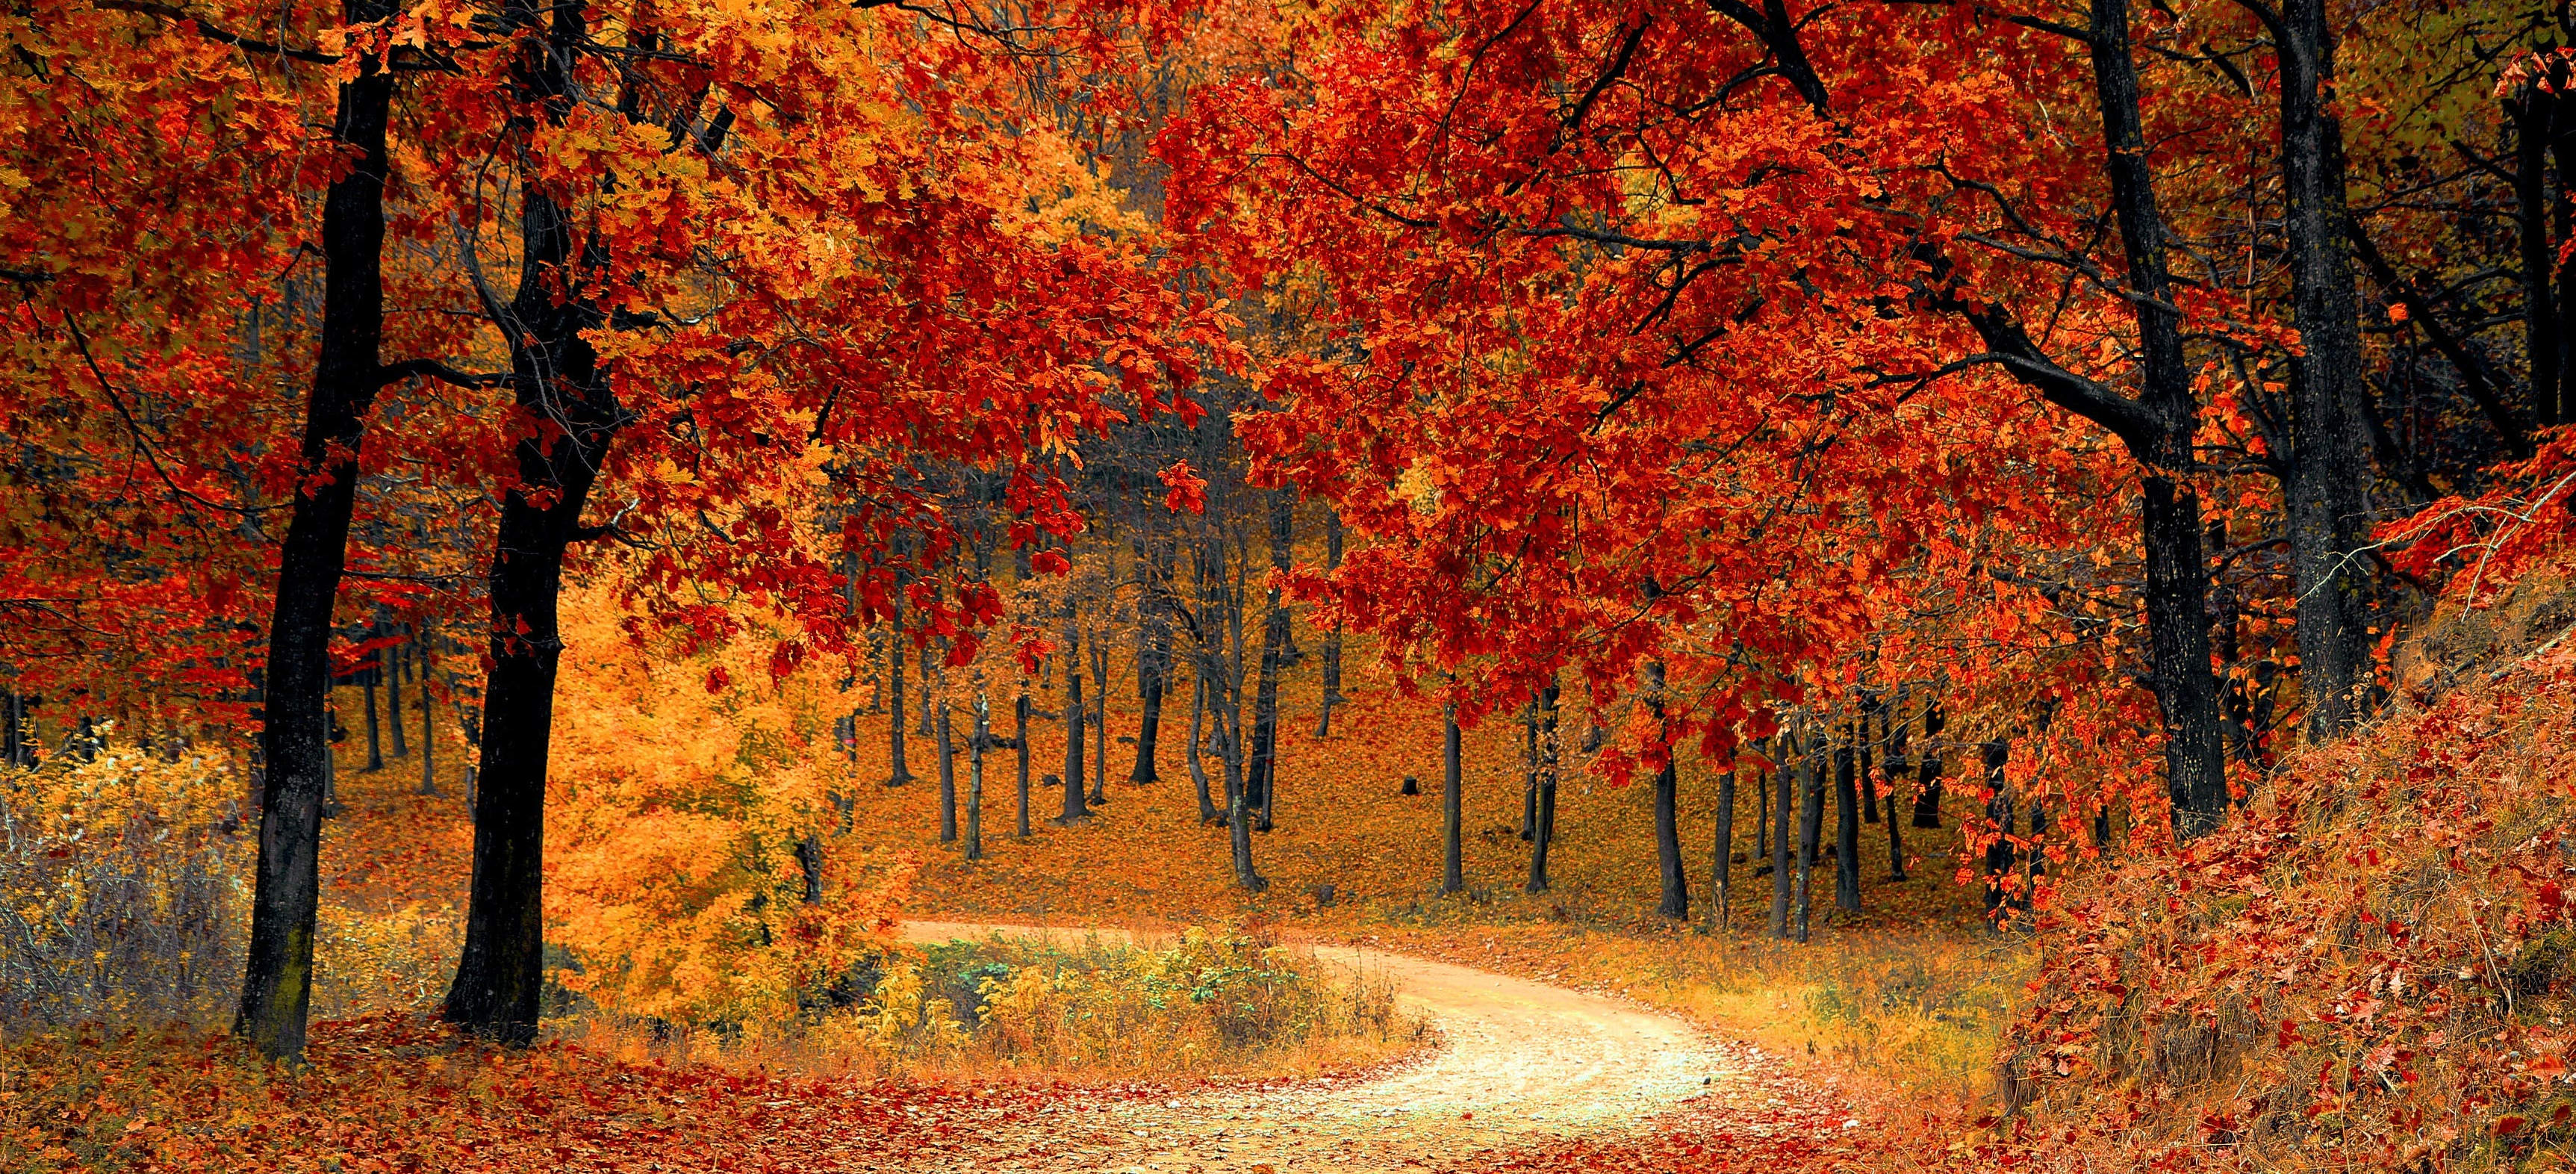 A scenic trail with bright orange autumn leaves 